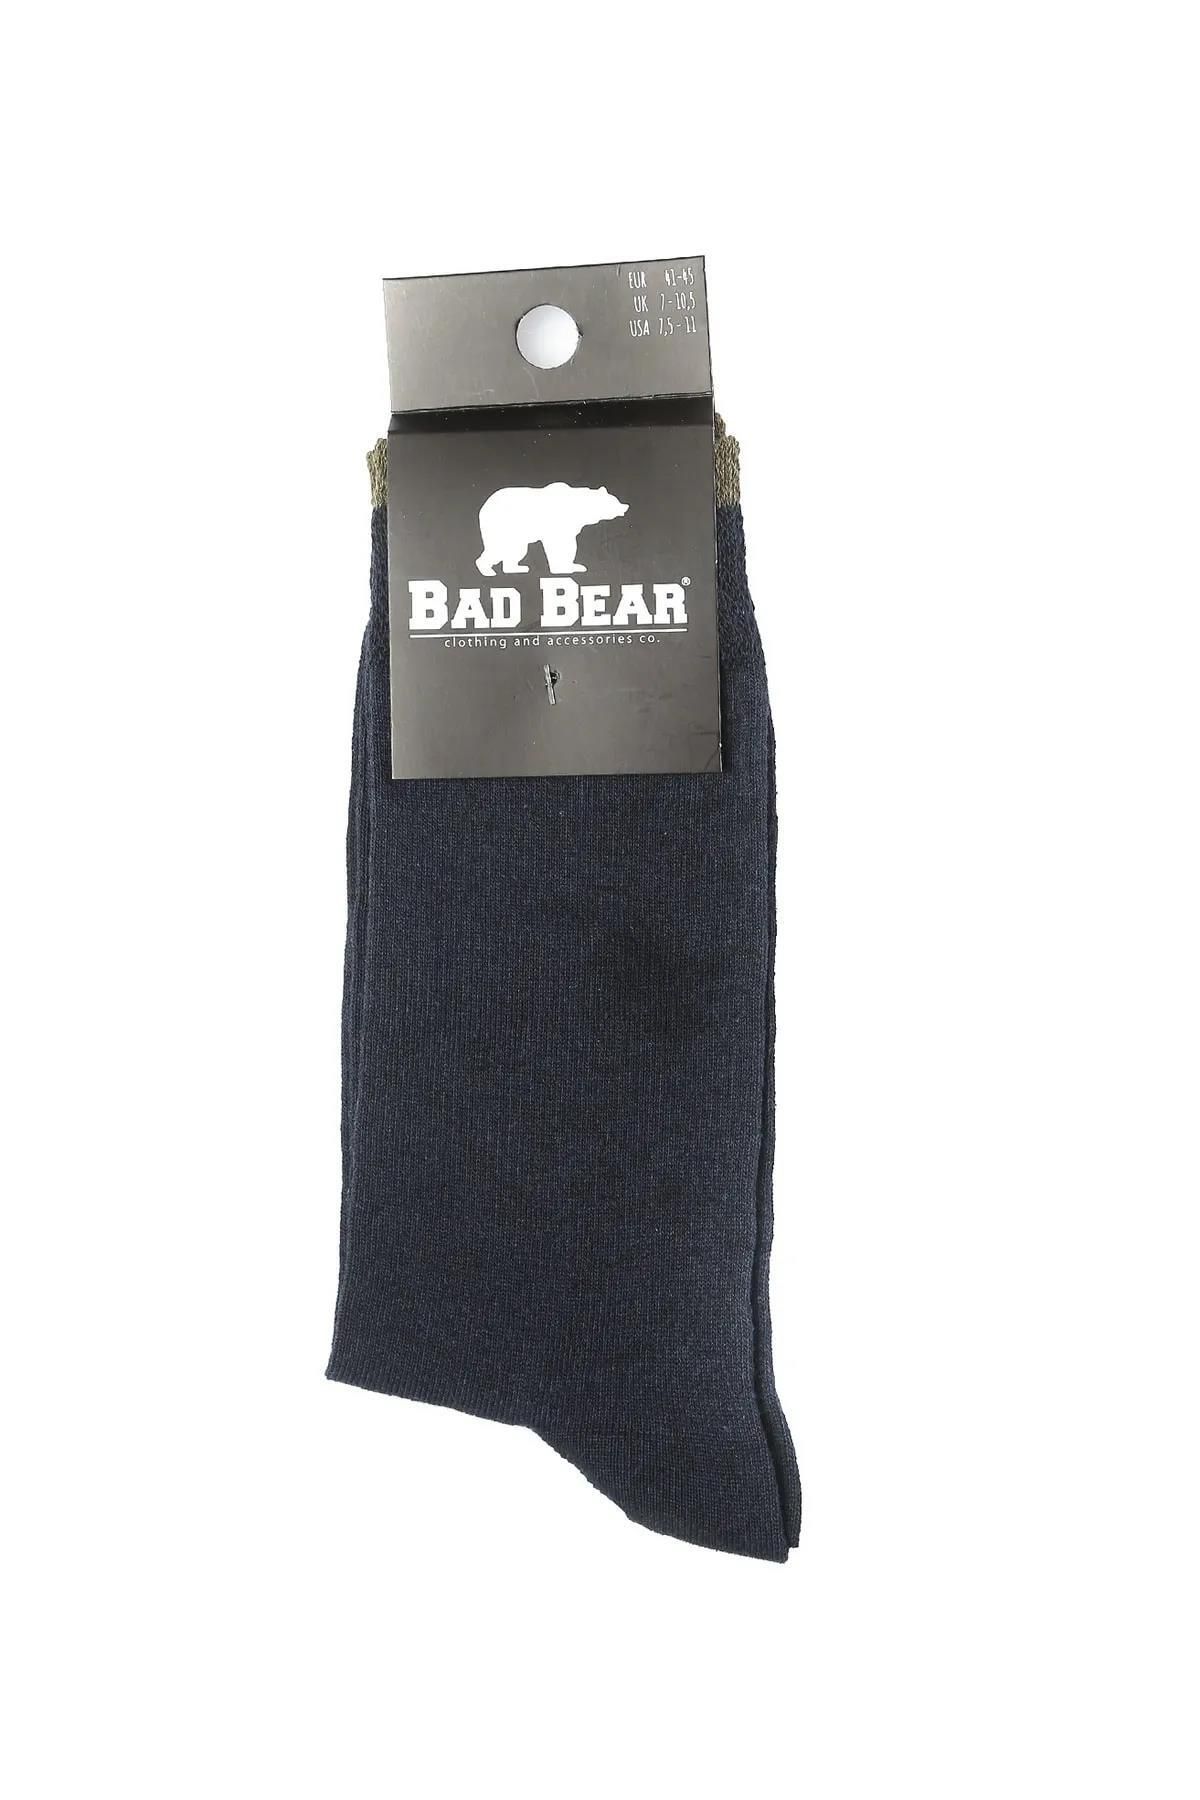 Bad Bear 21.02.02.009-c0113 Flat Tall Unisex Çorap